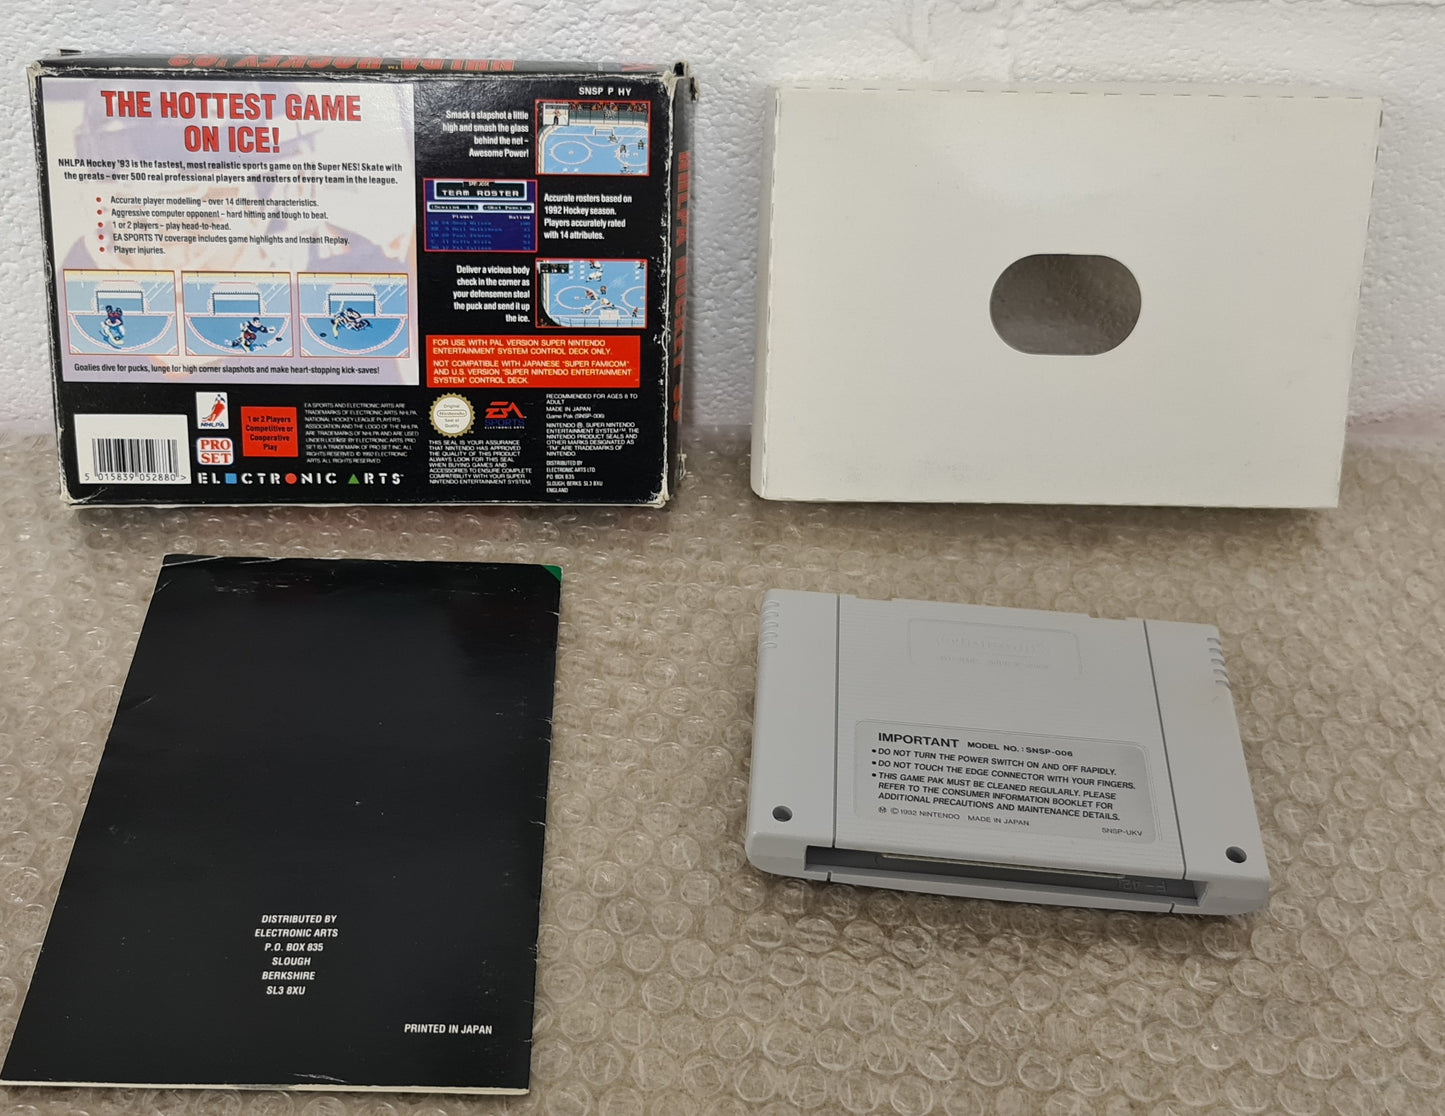 NHLPA 93 Super Nintendo Entertainment System (SNES) Game